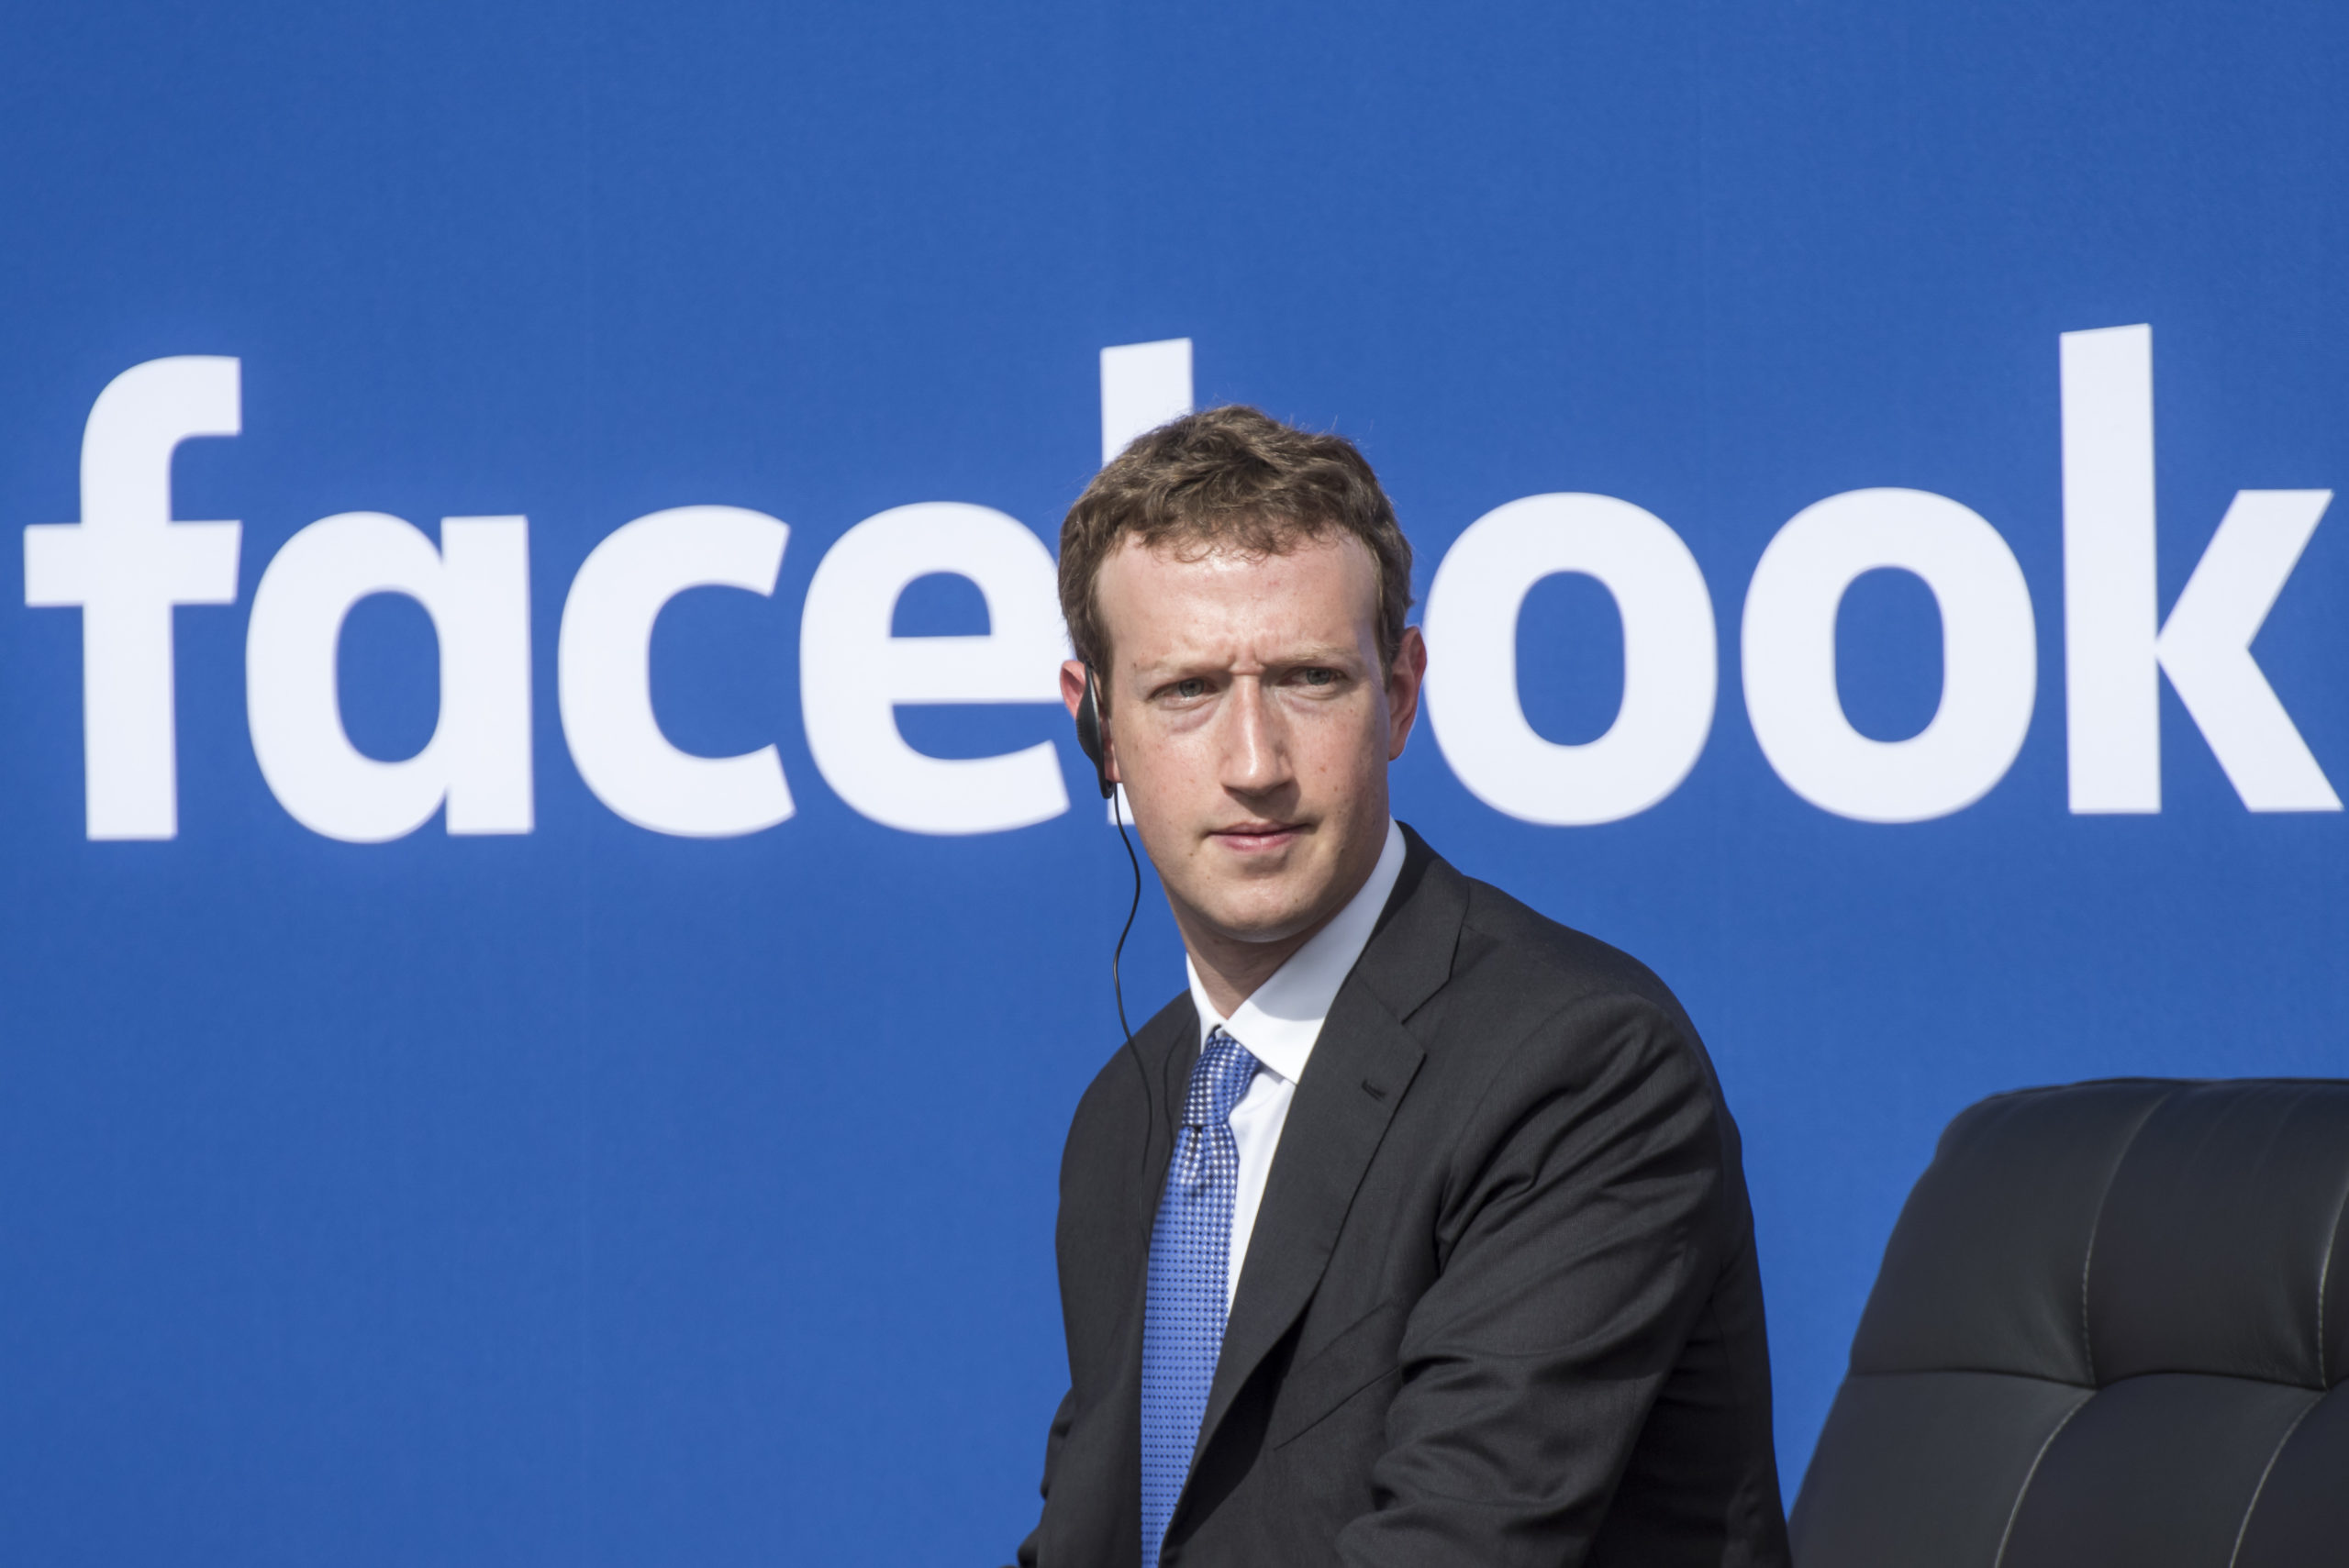 Mark Zuckerberg, chief executive officer of Facebook